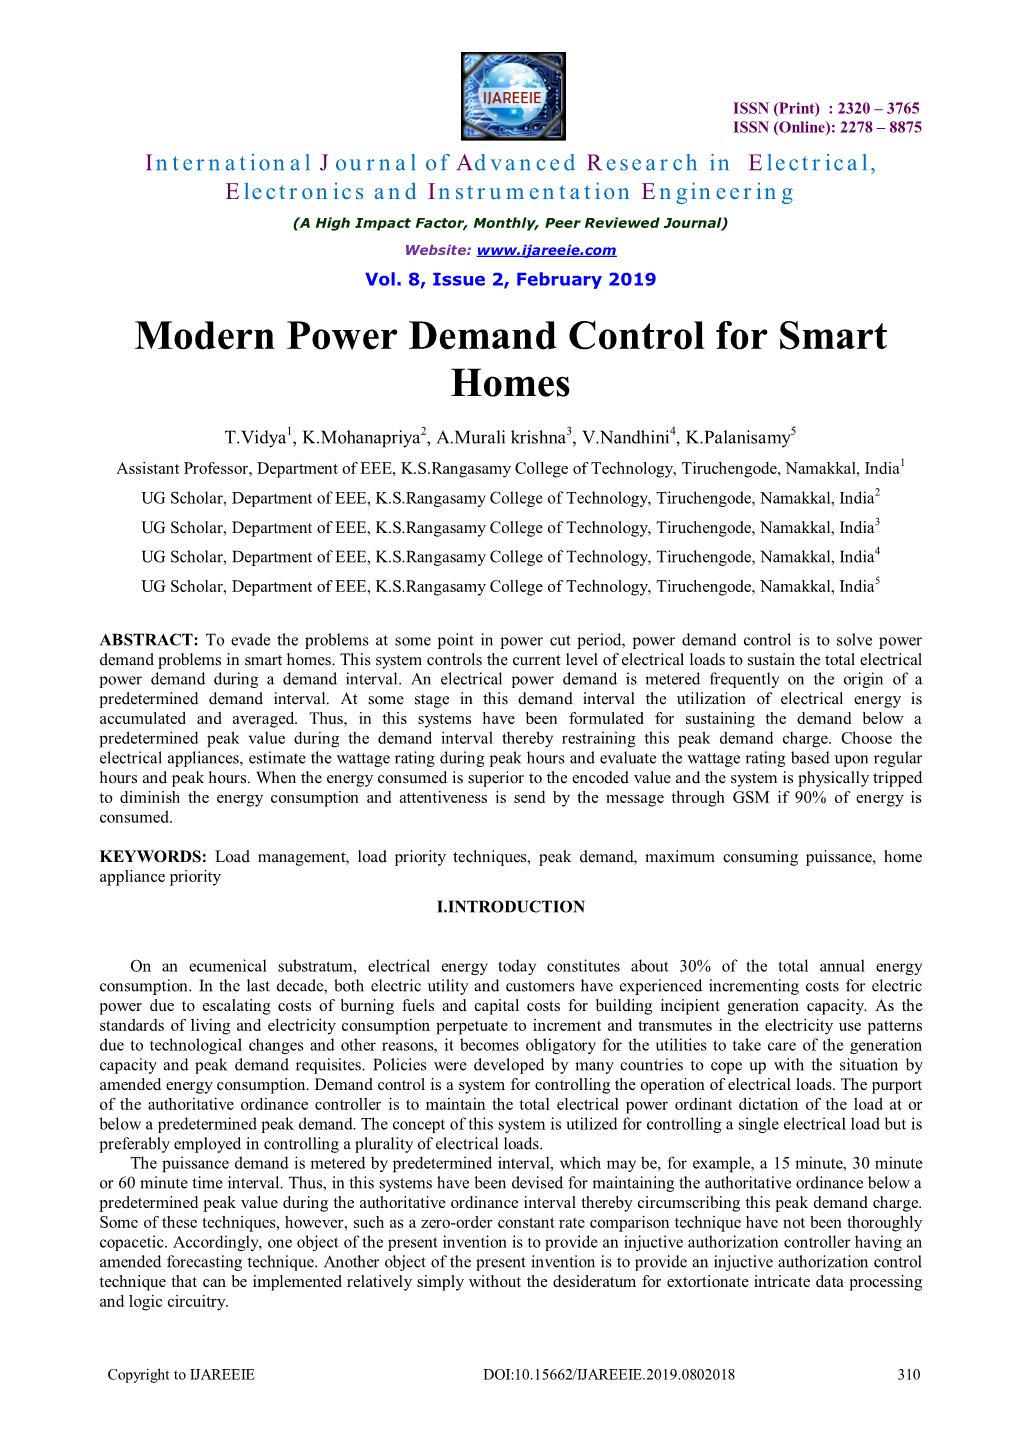 Modern Power Demand Control for Smart Homes